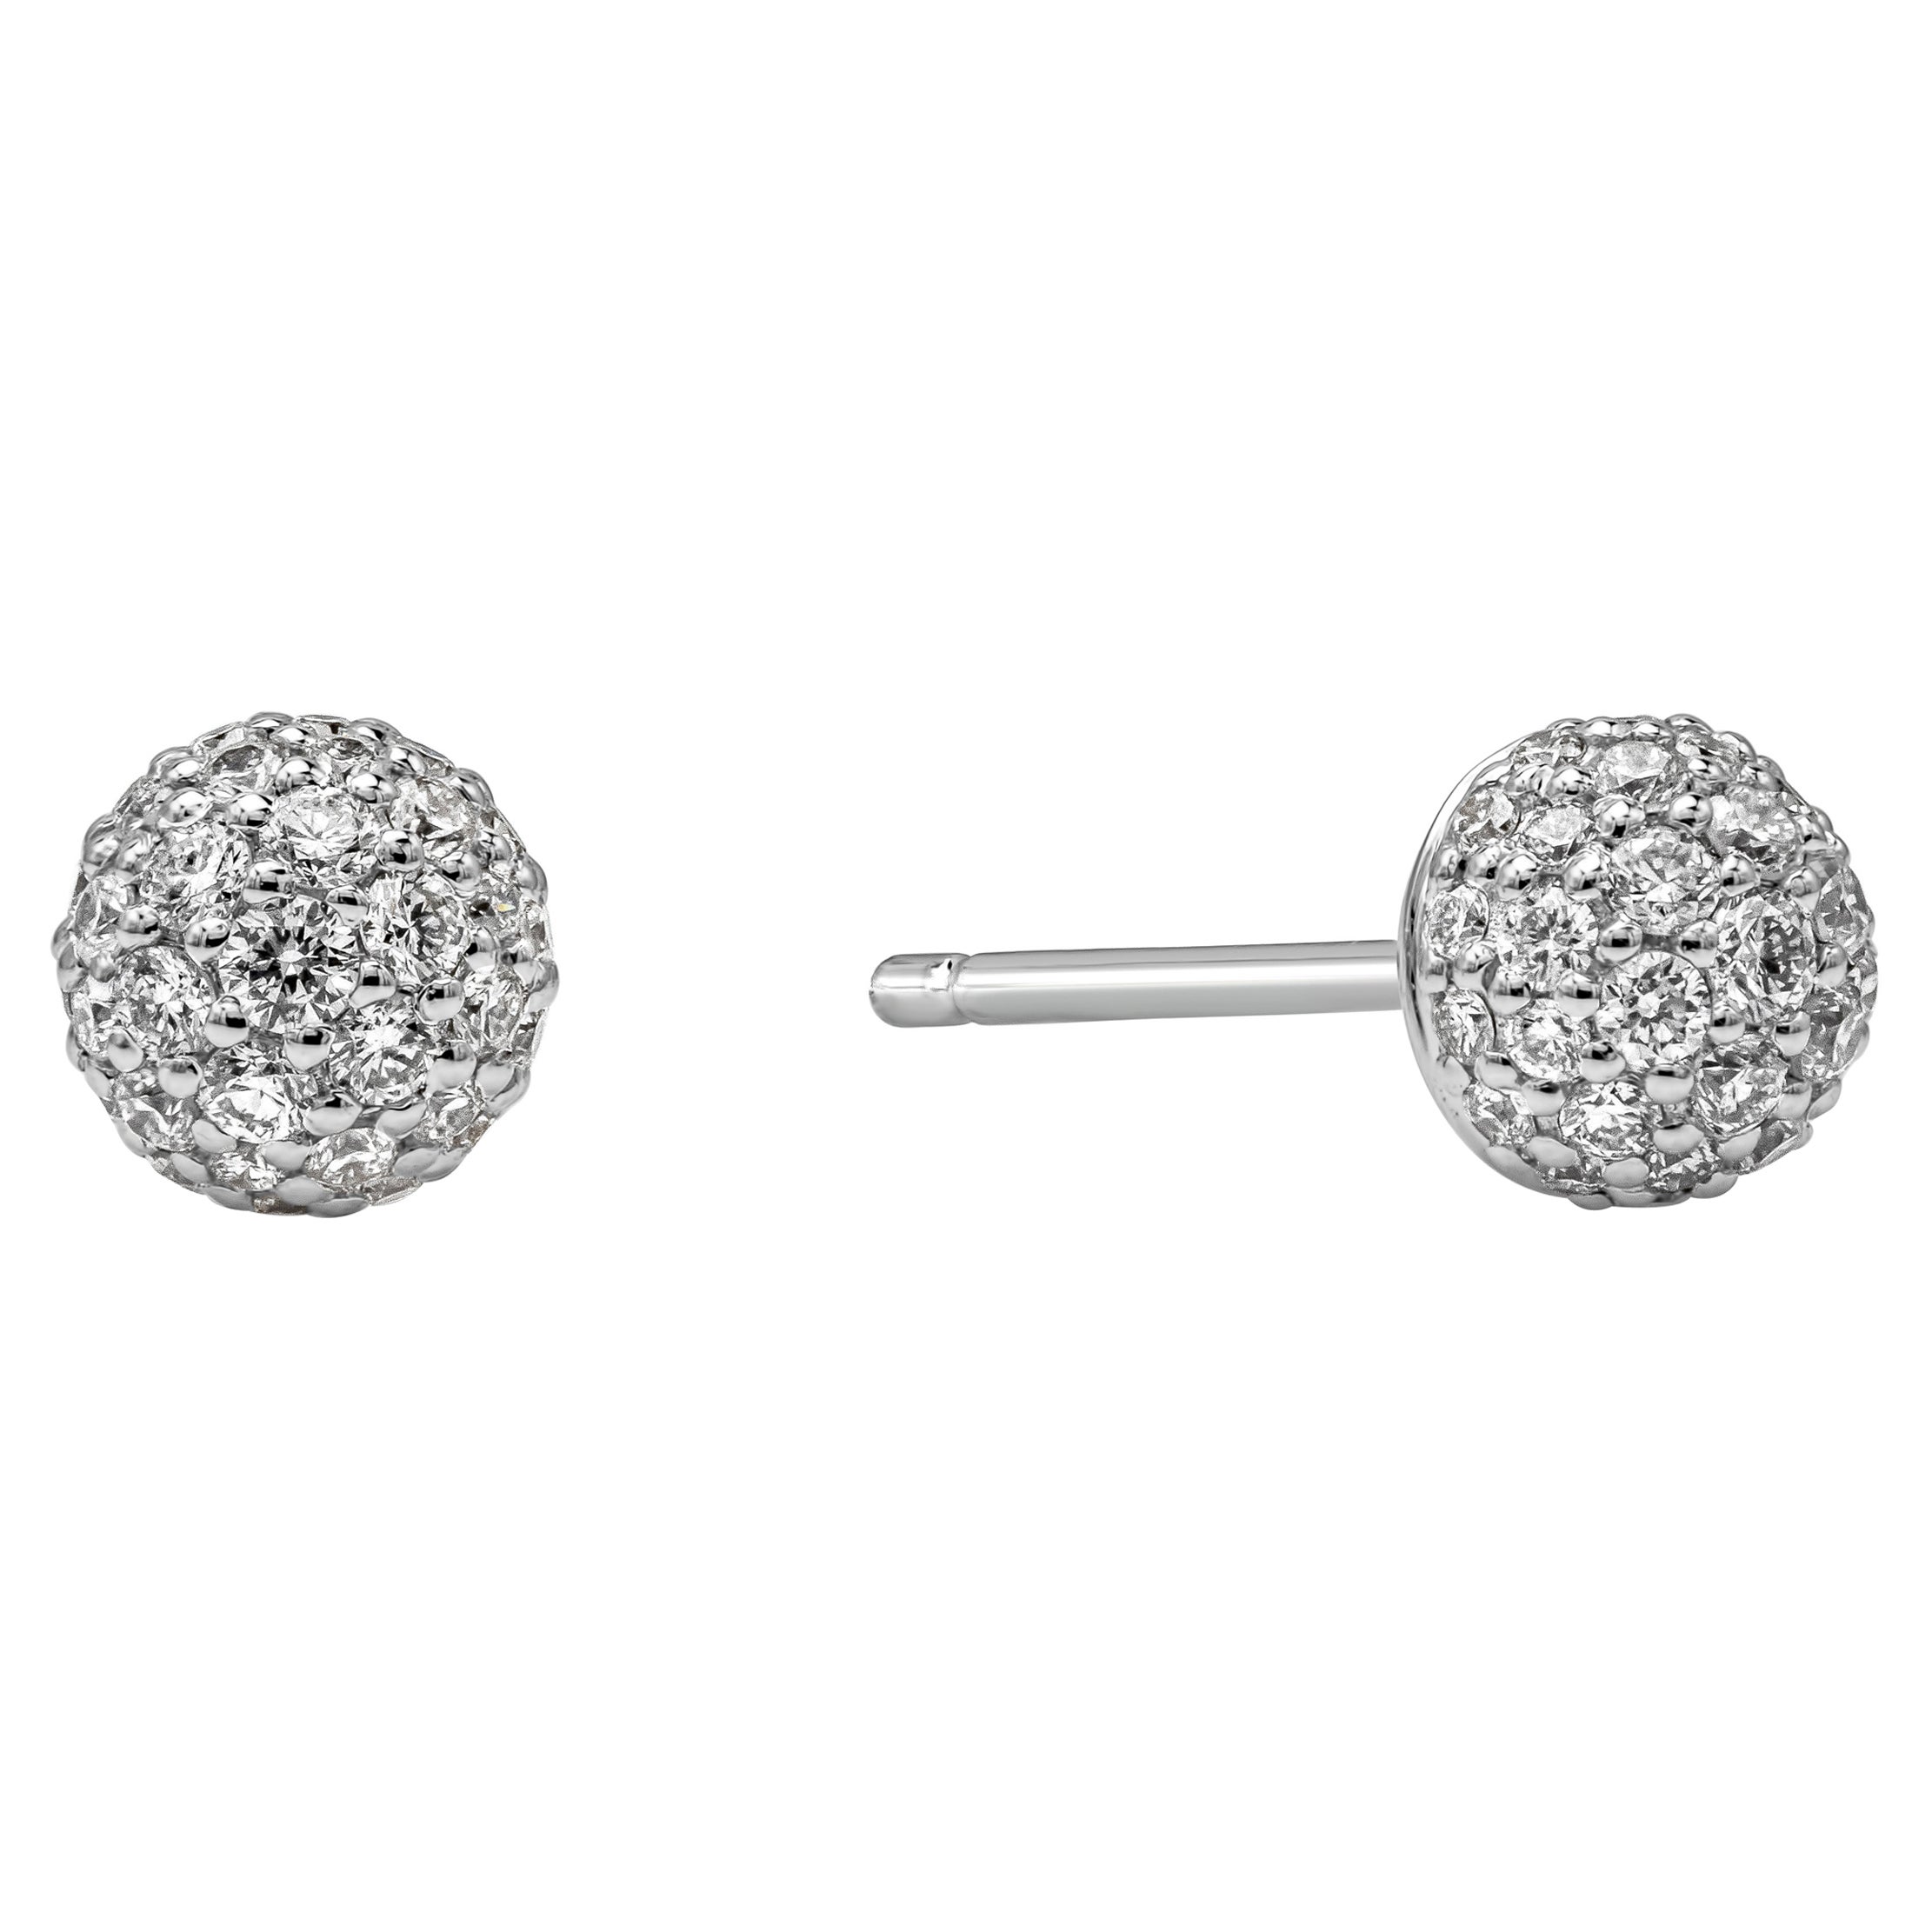 Roman Malakov 0.30 Carats Total Brilliant Round Diamond Micro-Pave Stud Earrings